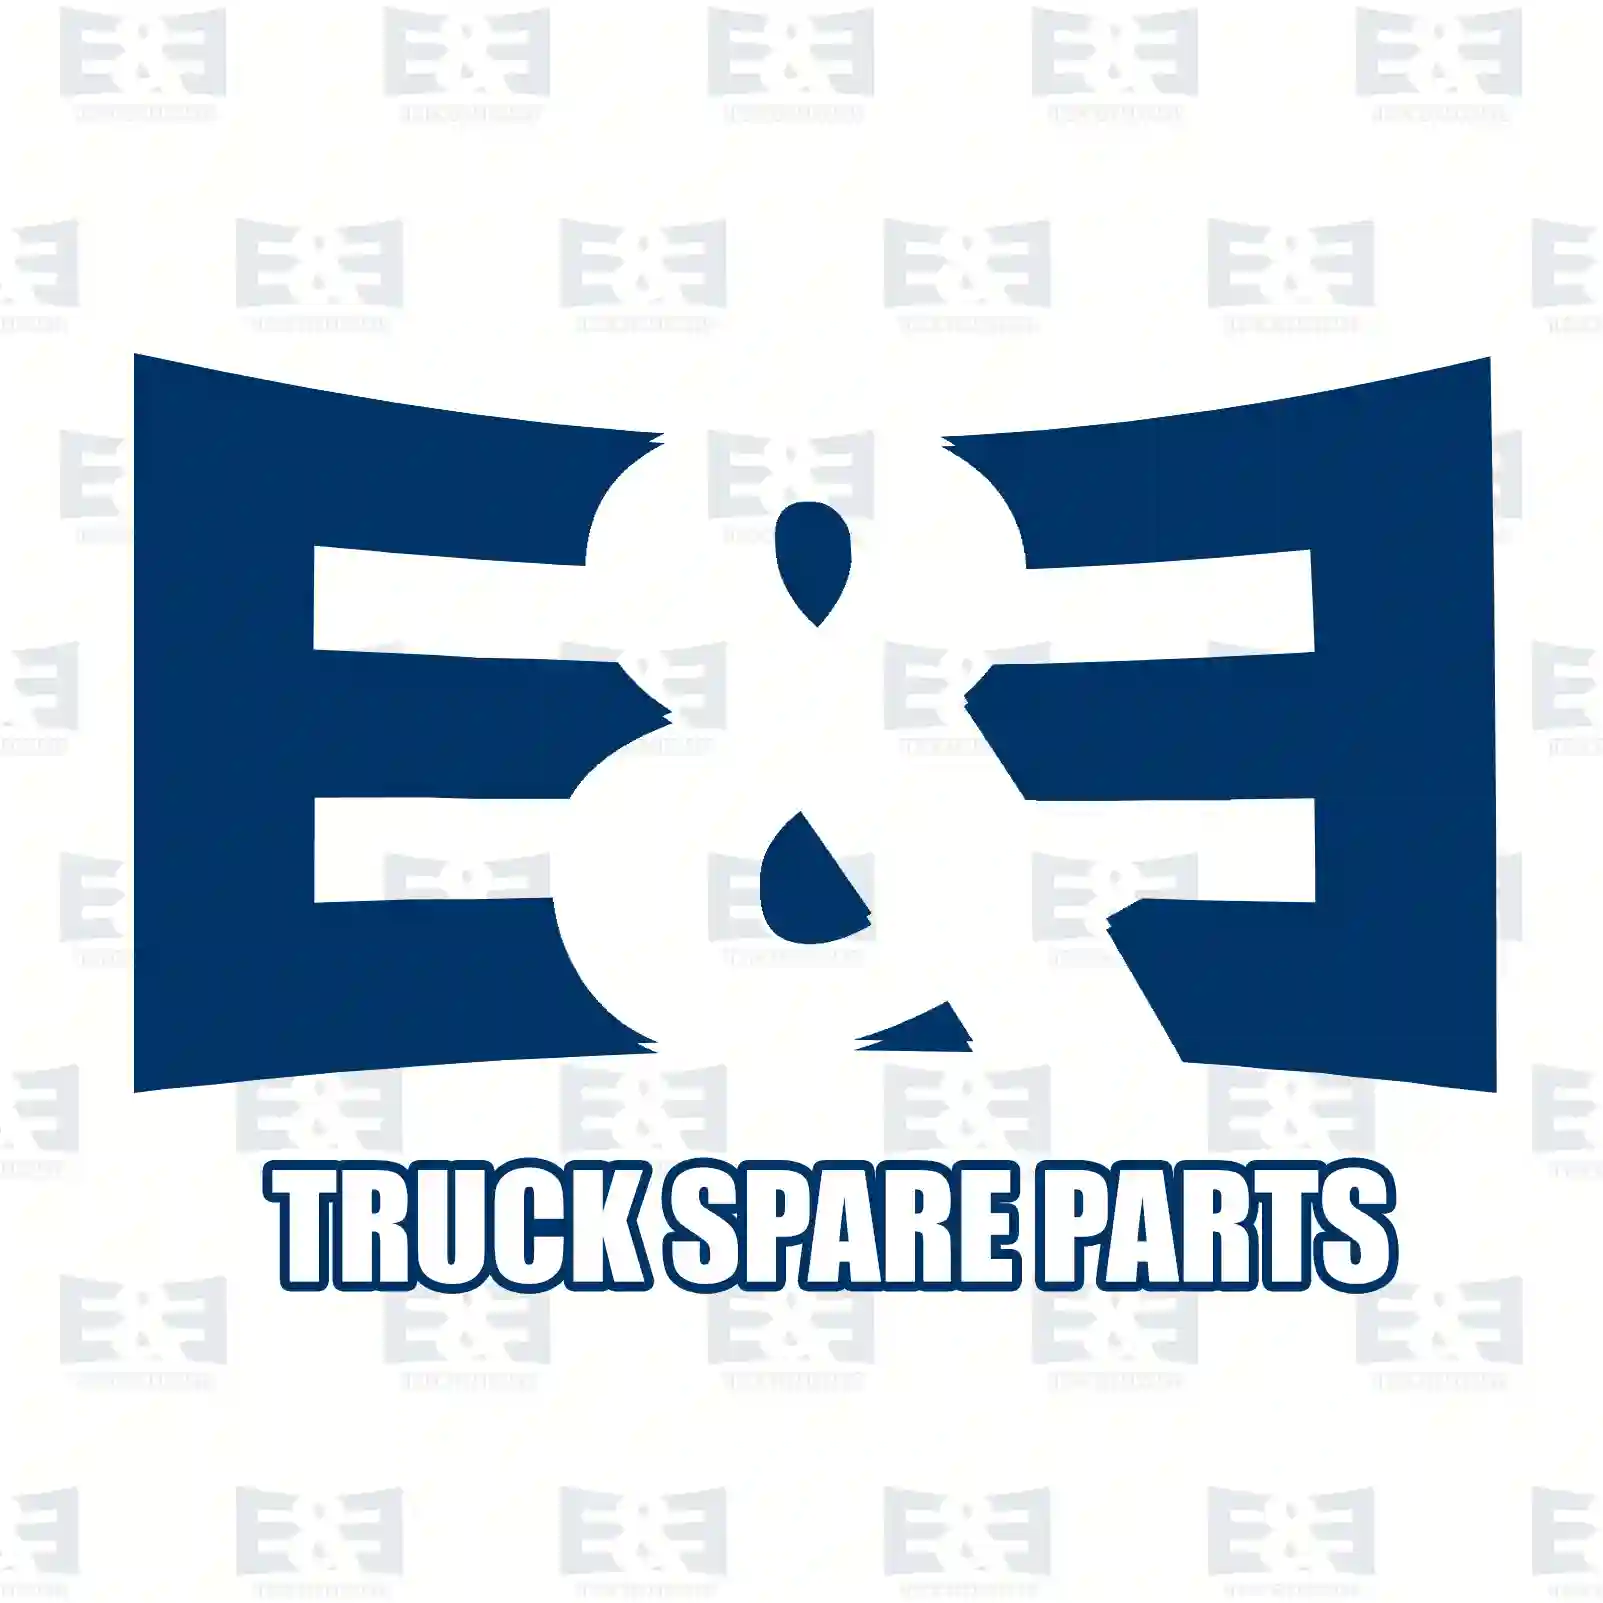 Engine mounting, 2E2208719, 480336, 6532410013, 6532410113, 6532410213 ||  2E2208719 E&E Truck Spare Parts | Truck Spare Parts, Auotomotive Spare Parts Engine mounting, 2E2208719, 480336, 6532410013, 6532410113, 6532410213 ||  2E2208719 E&E Truck Spare Parts | Truck Spare Parts, Auotomotive Spare Parts